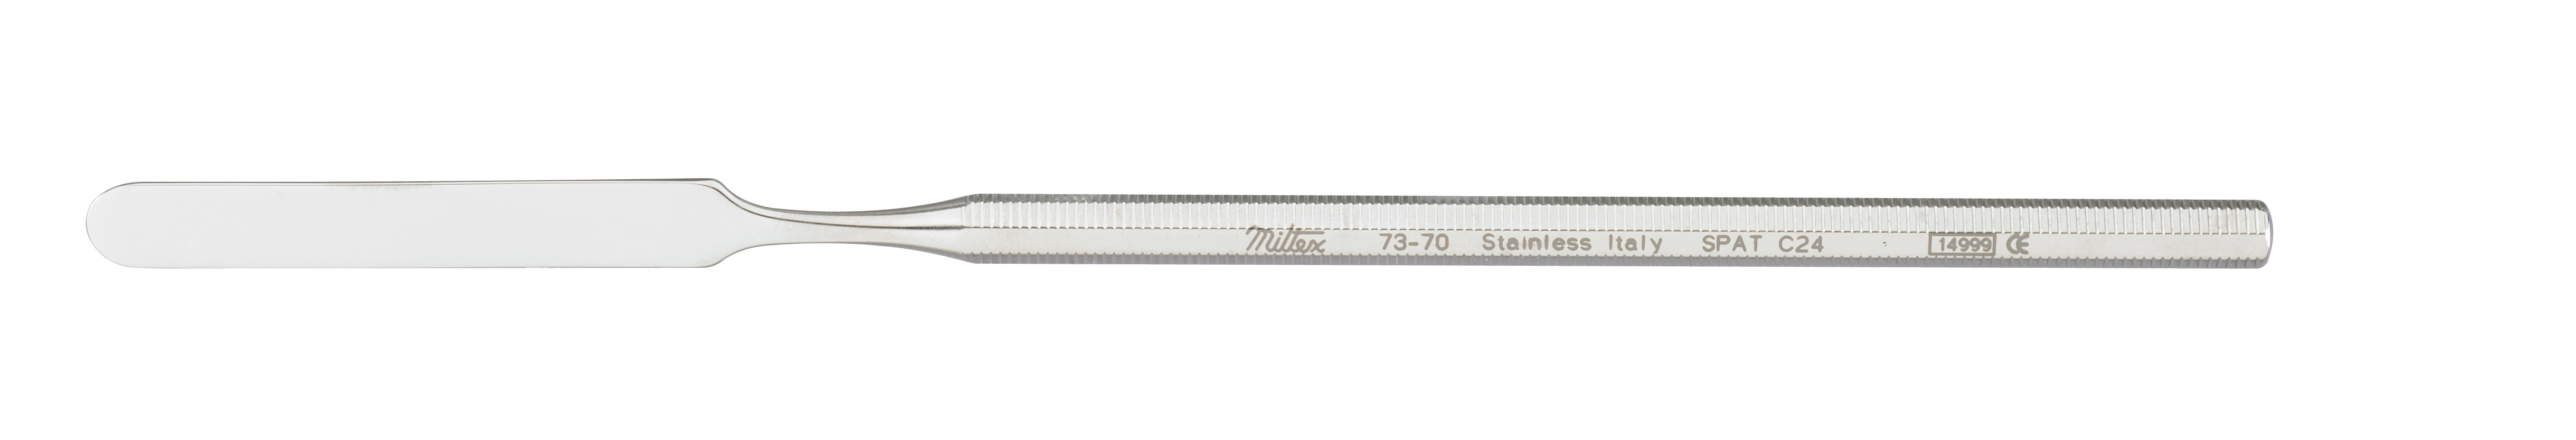 no-24-cement-spatula-flexible-73-70-miltex.jpg